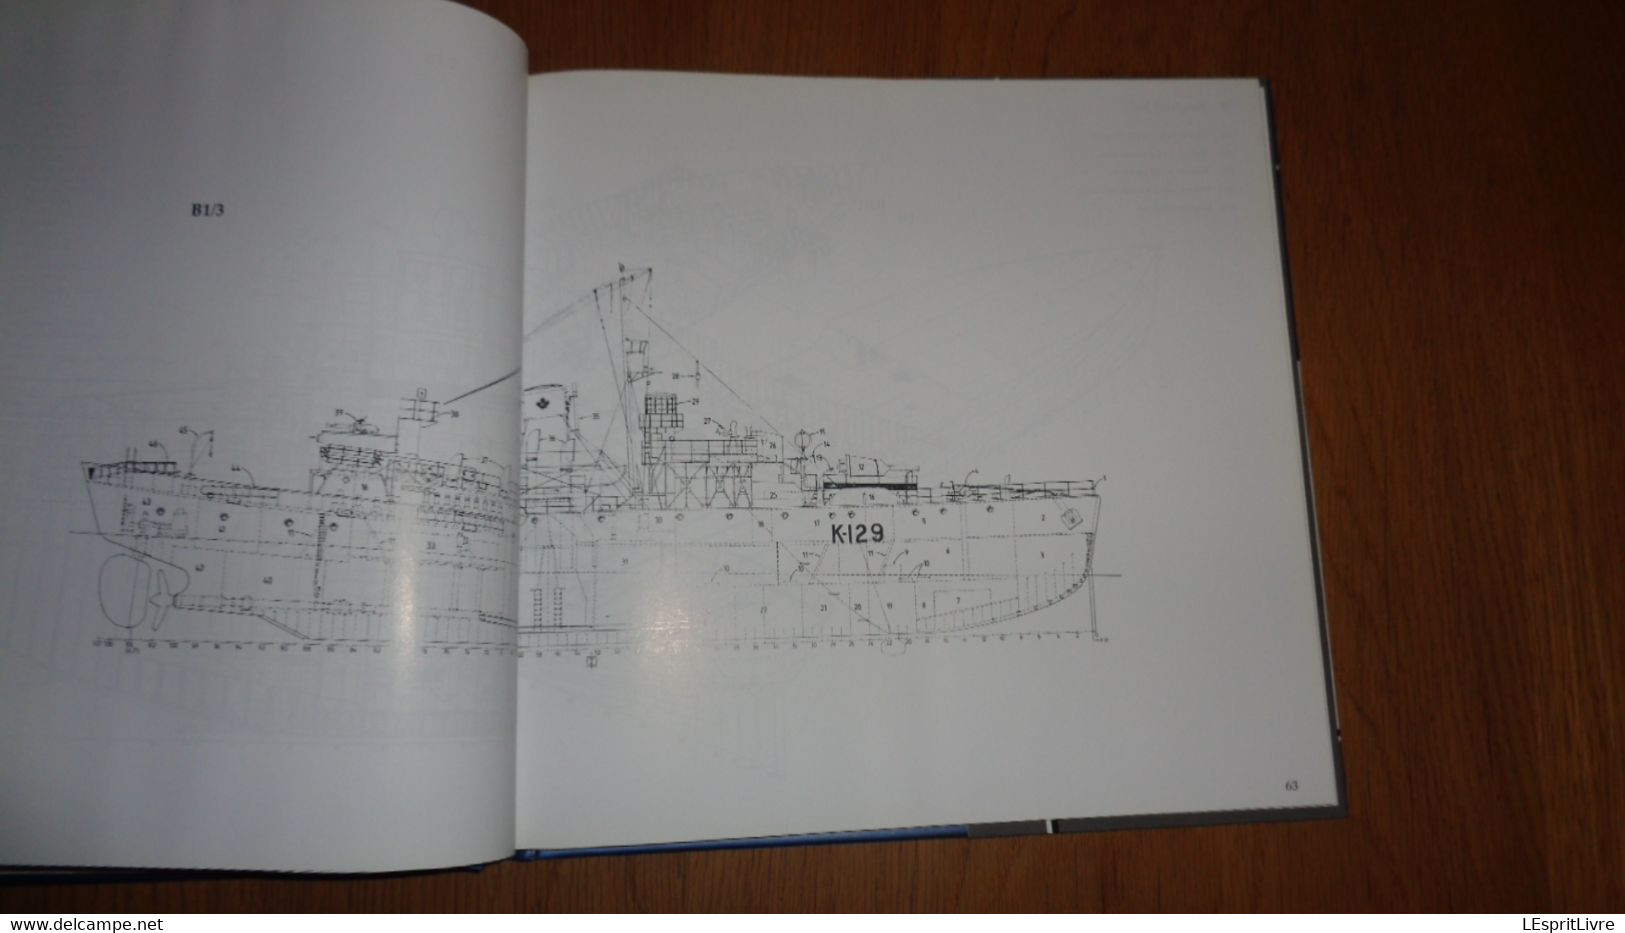 THE FLOWER CLASS CORVETTE AGASSIZ Anatomy of the Ship Marine Royal Navy Royaume Uni UK Boat Guerre 40 45 Mer Atlantique